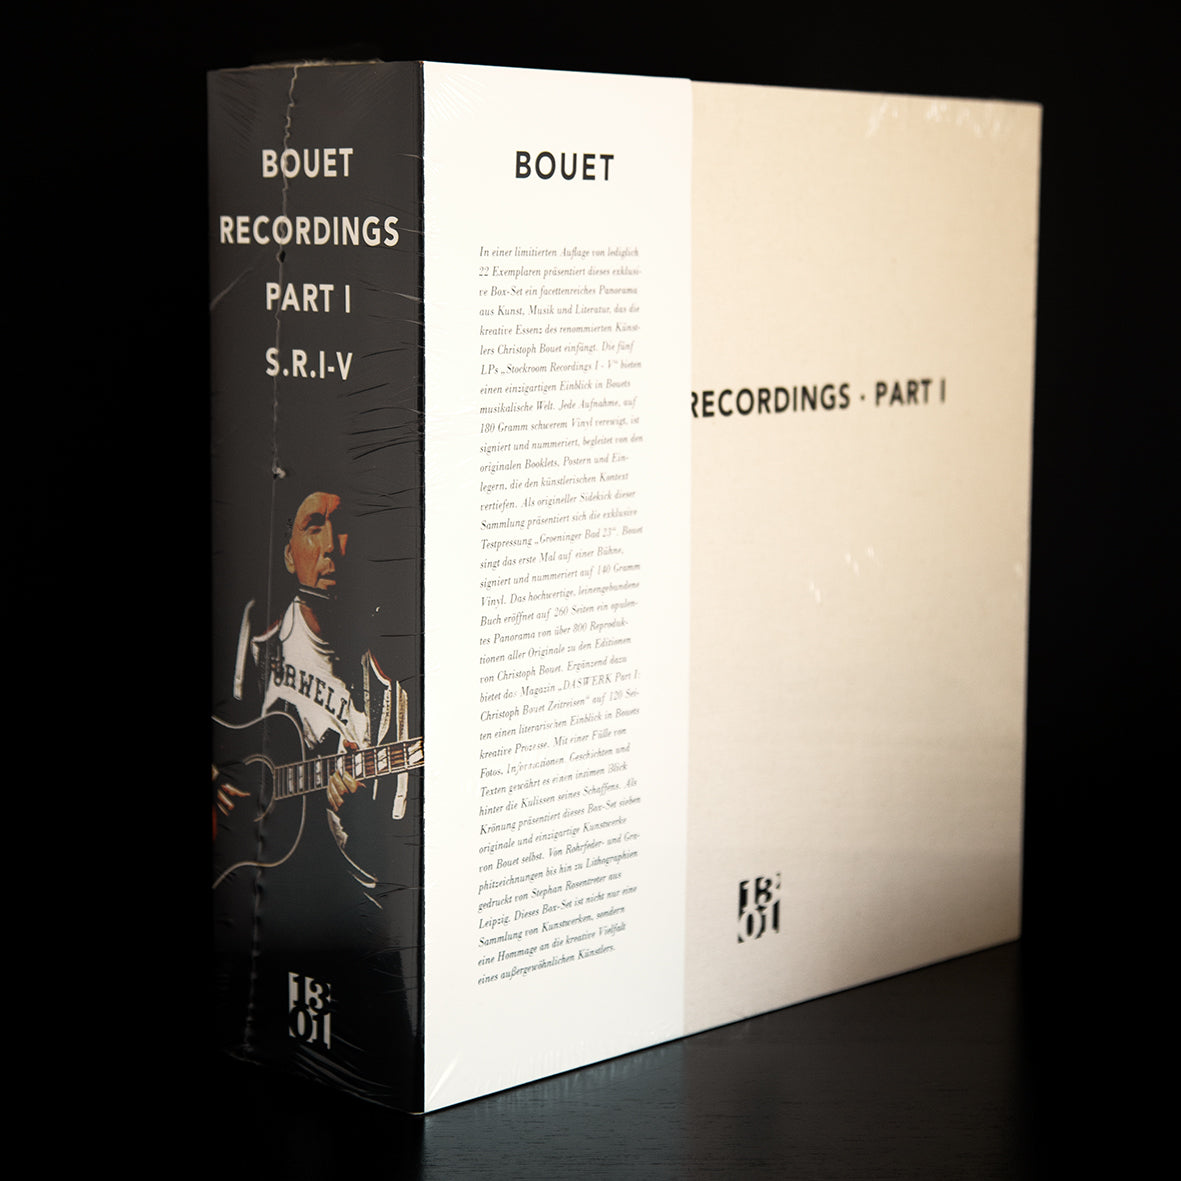 BOUET "RECORDINGS PART I" BOX-SET